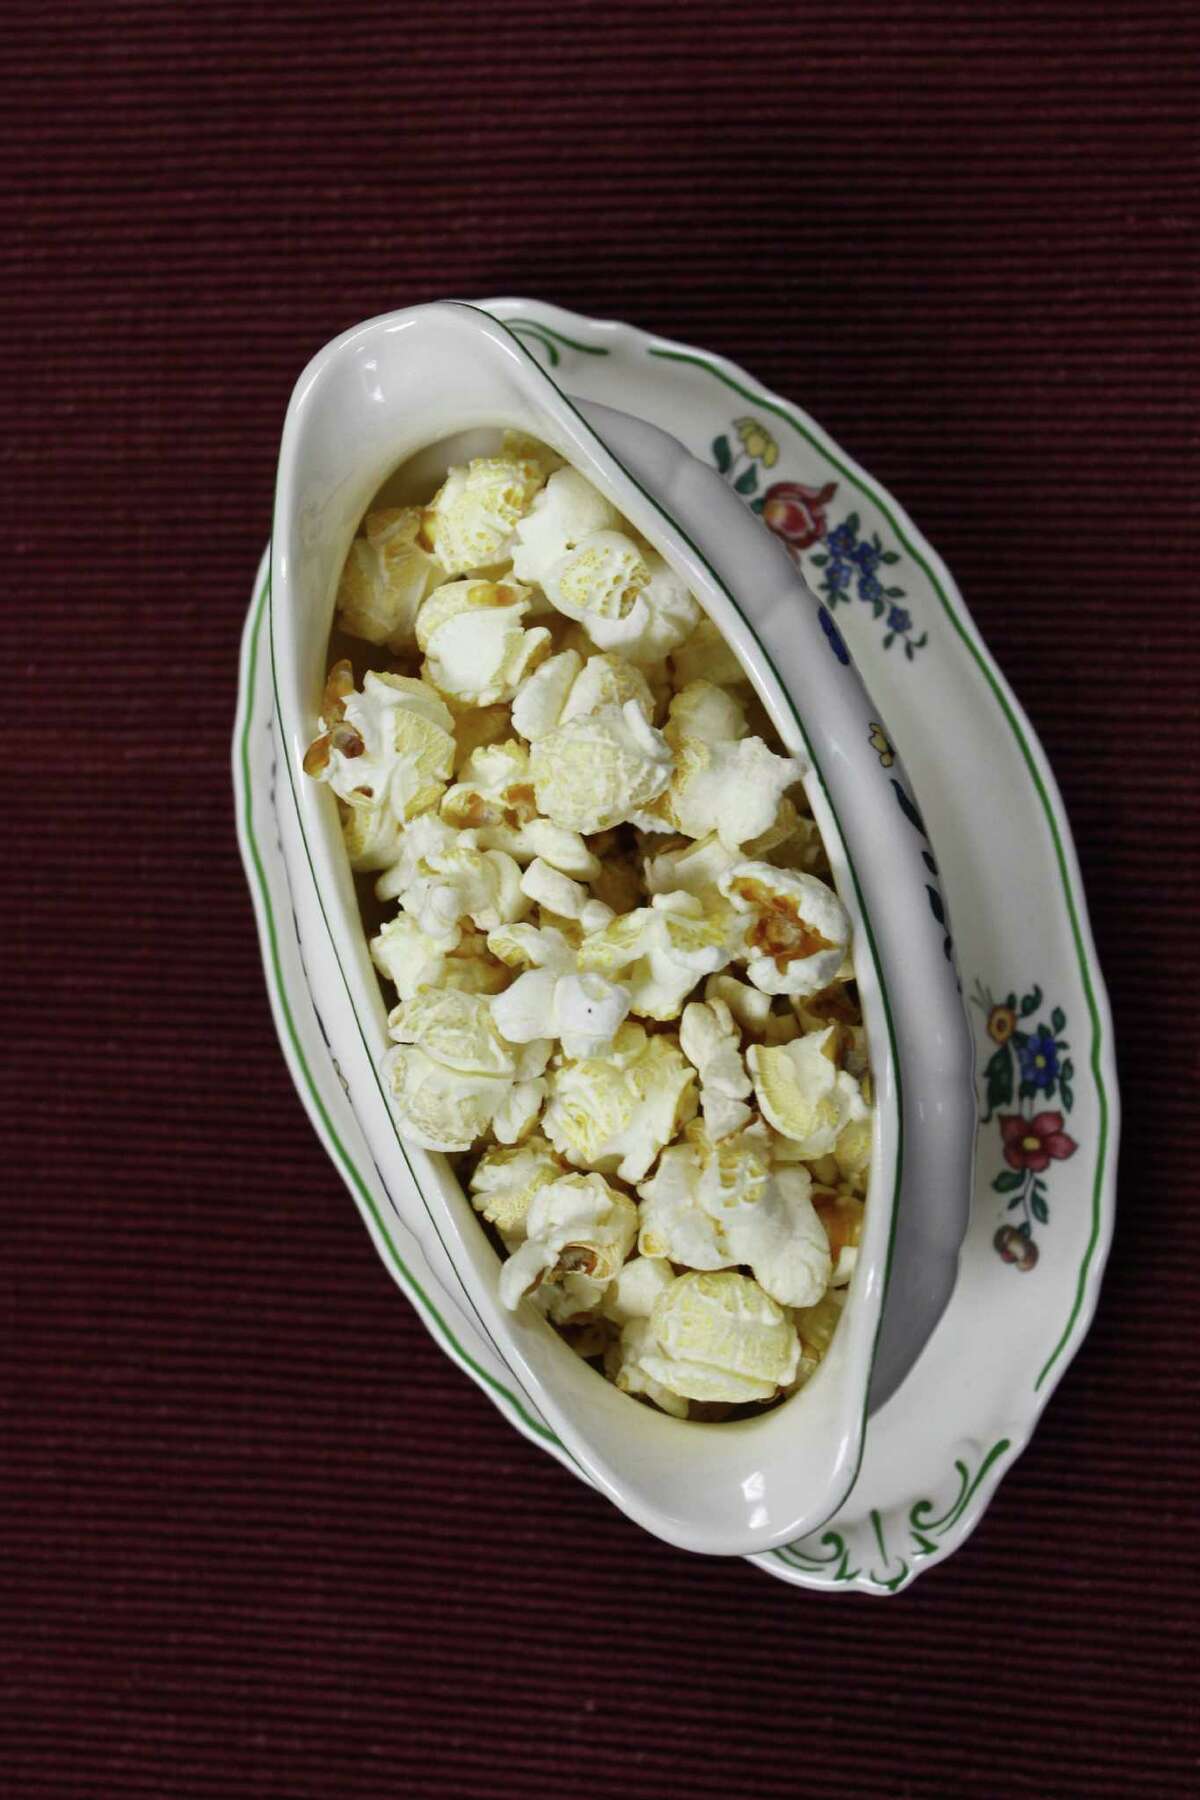 Turkey-flavored popcorn? Pass the gravy popcorn